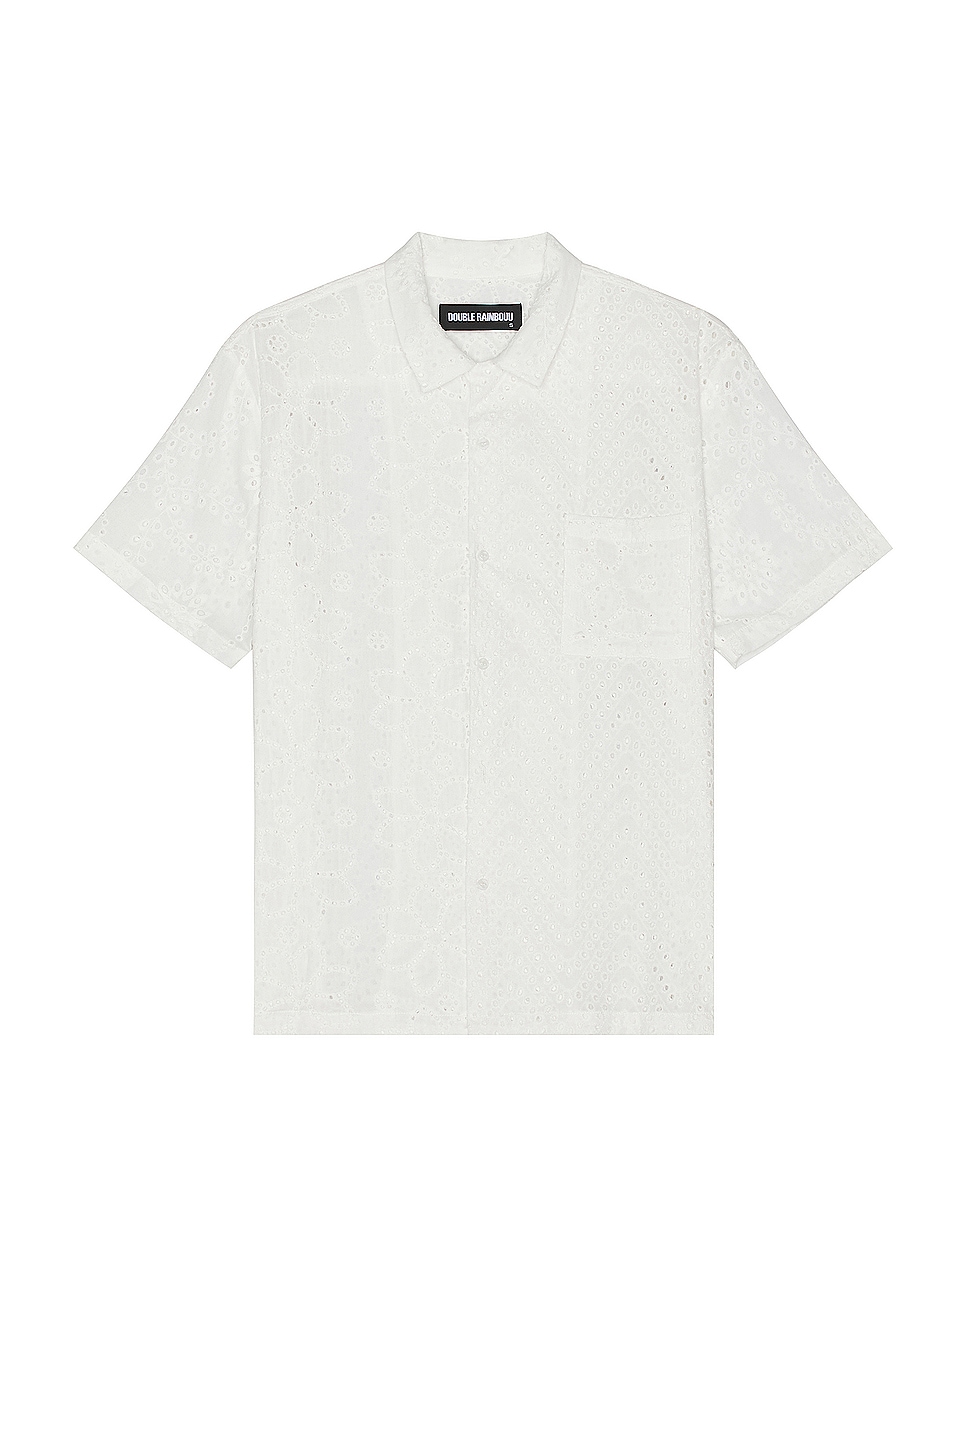 Image 1 of DOUBLE RAINBOUU Hawaiian Shirt in White Anglais